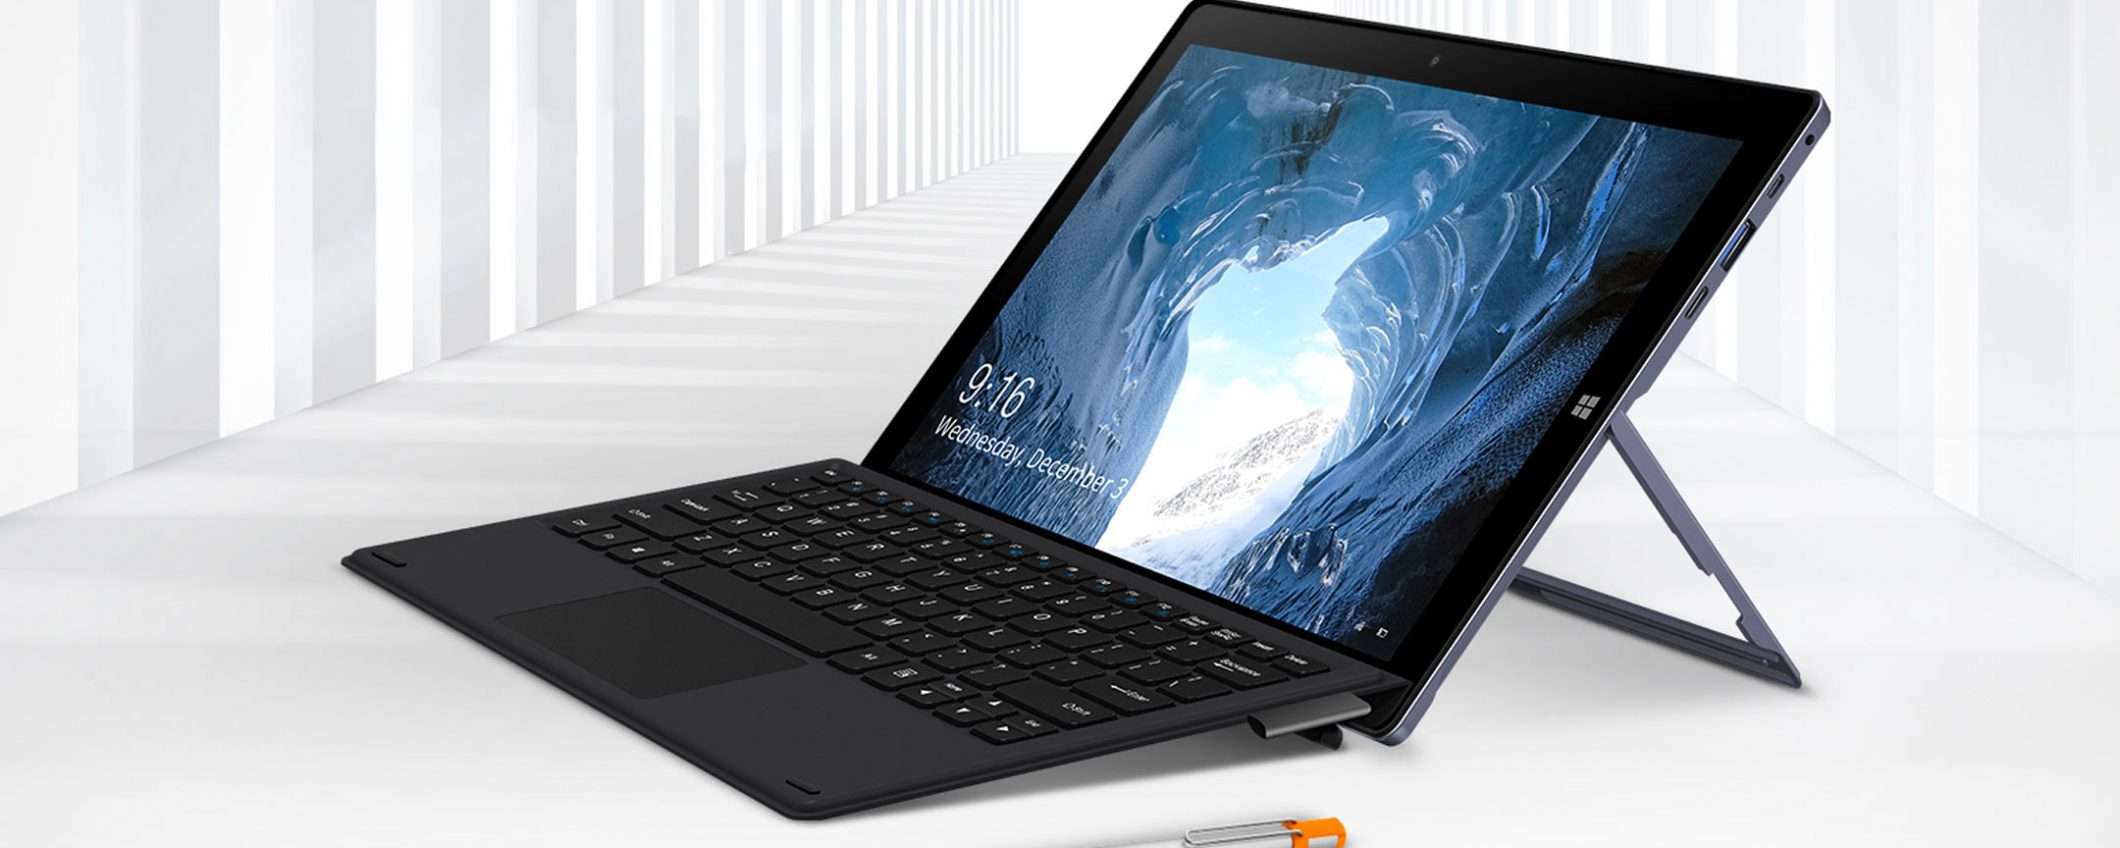 Tablet-laptop Windows 10: PREZZACCIO su Amazon